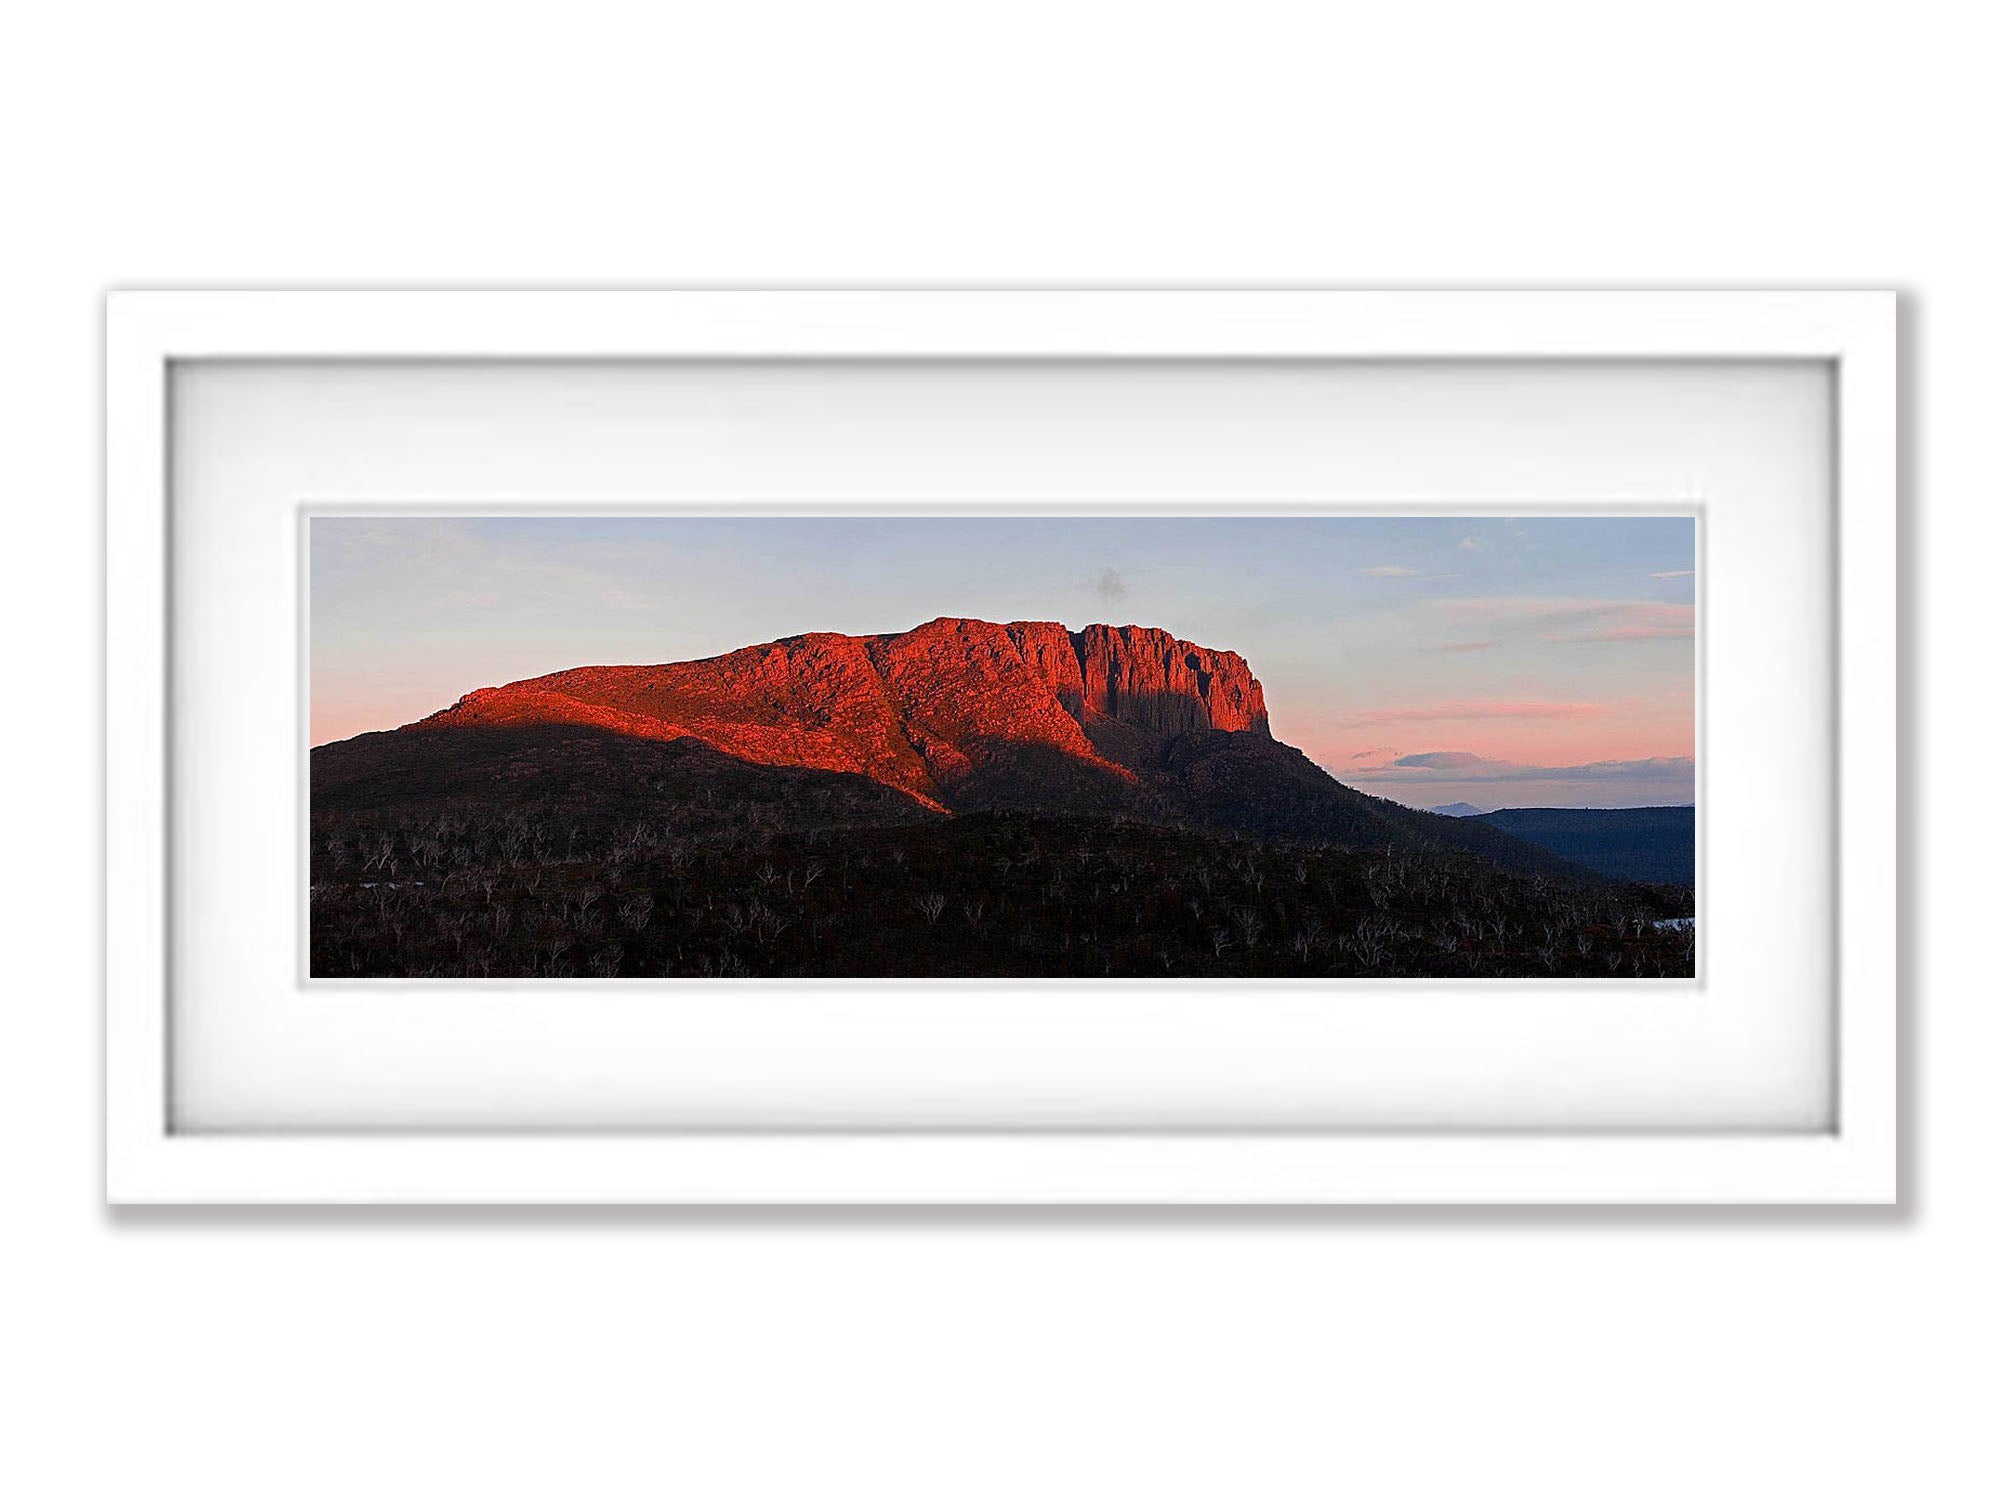 Walled Mountain, Overland Track, Cradle Mountain, Tasmania